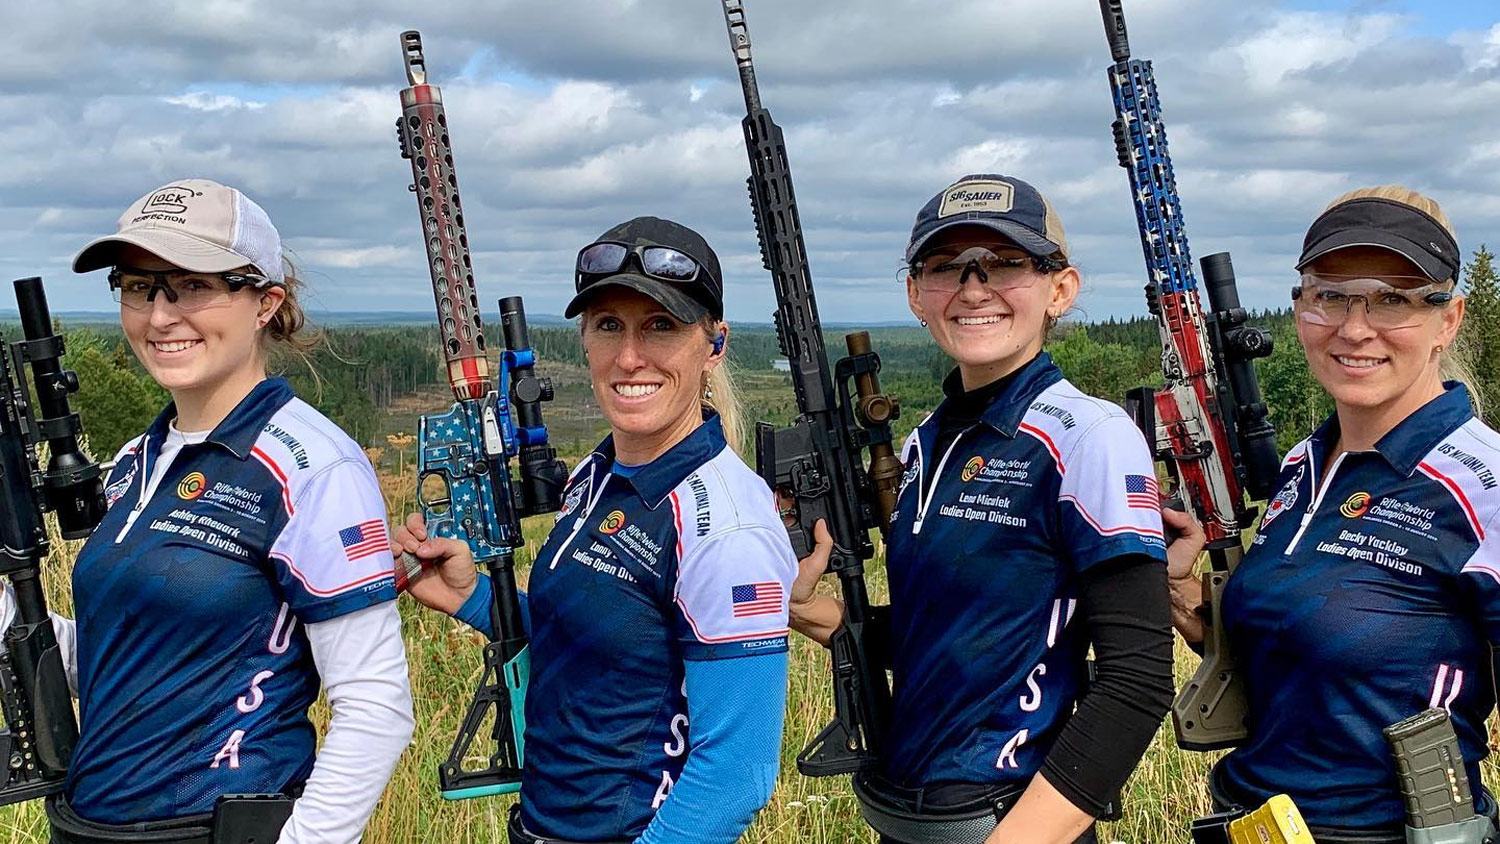 2019 U.S. Rifle Ladies Dominate In Sweden At IPSC Championship